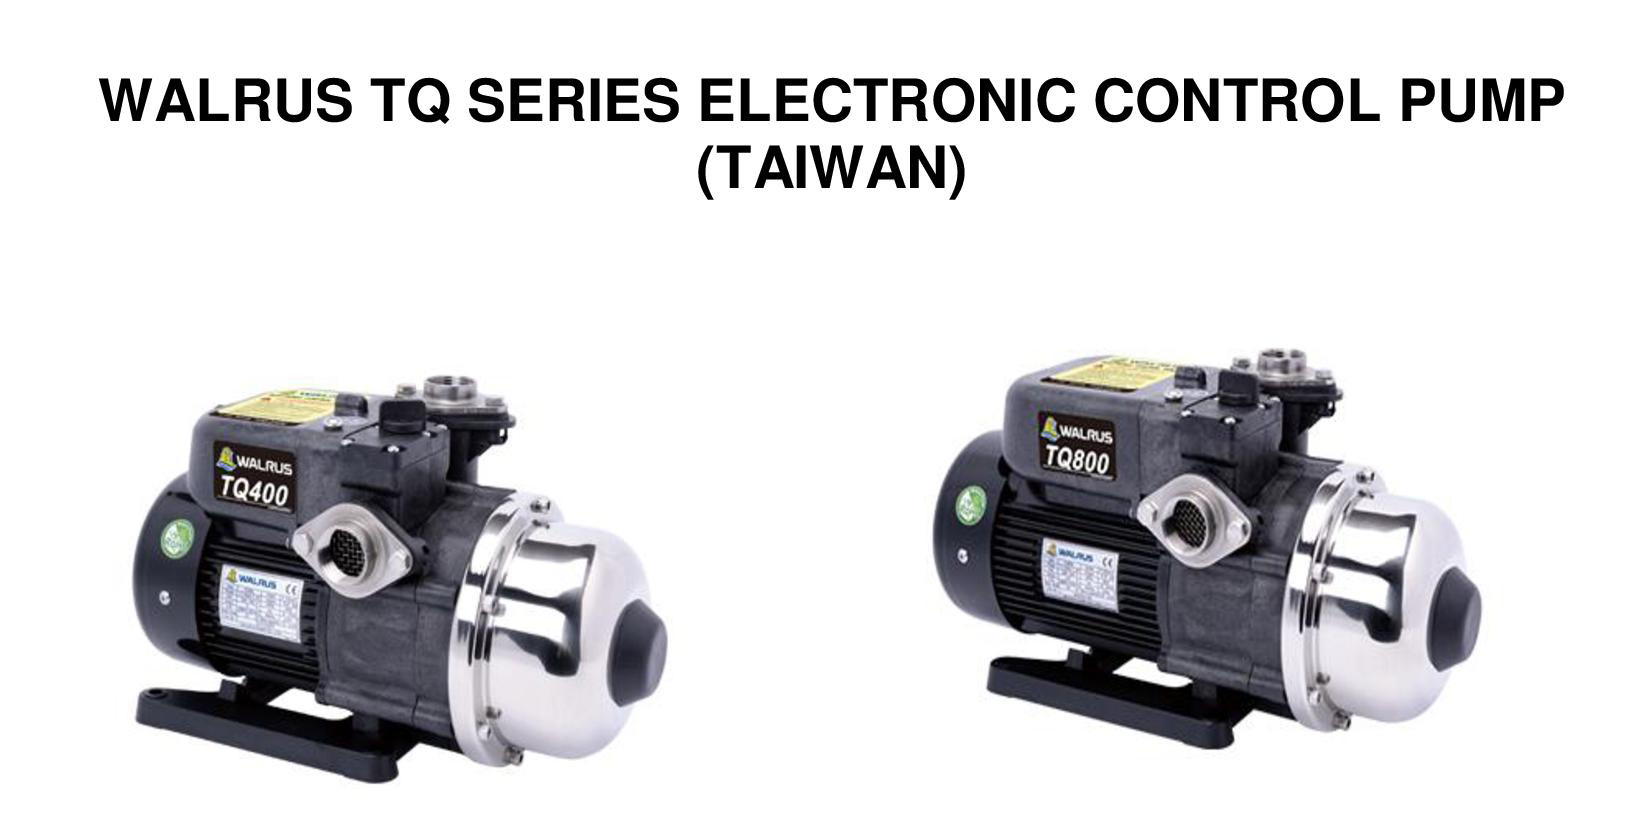 Walrus TQ400 / TQ800 Electronic Control Water Pump (Taiwan)